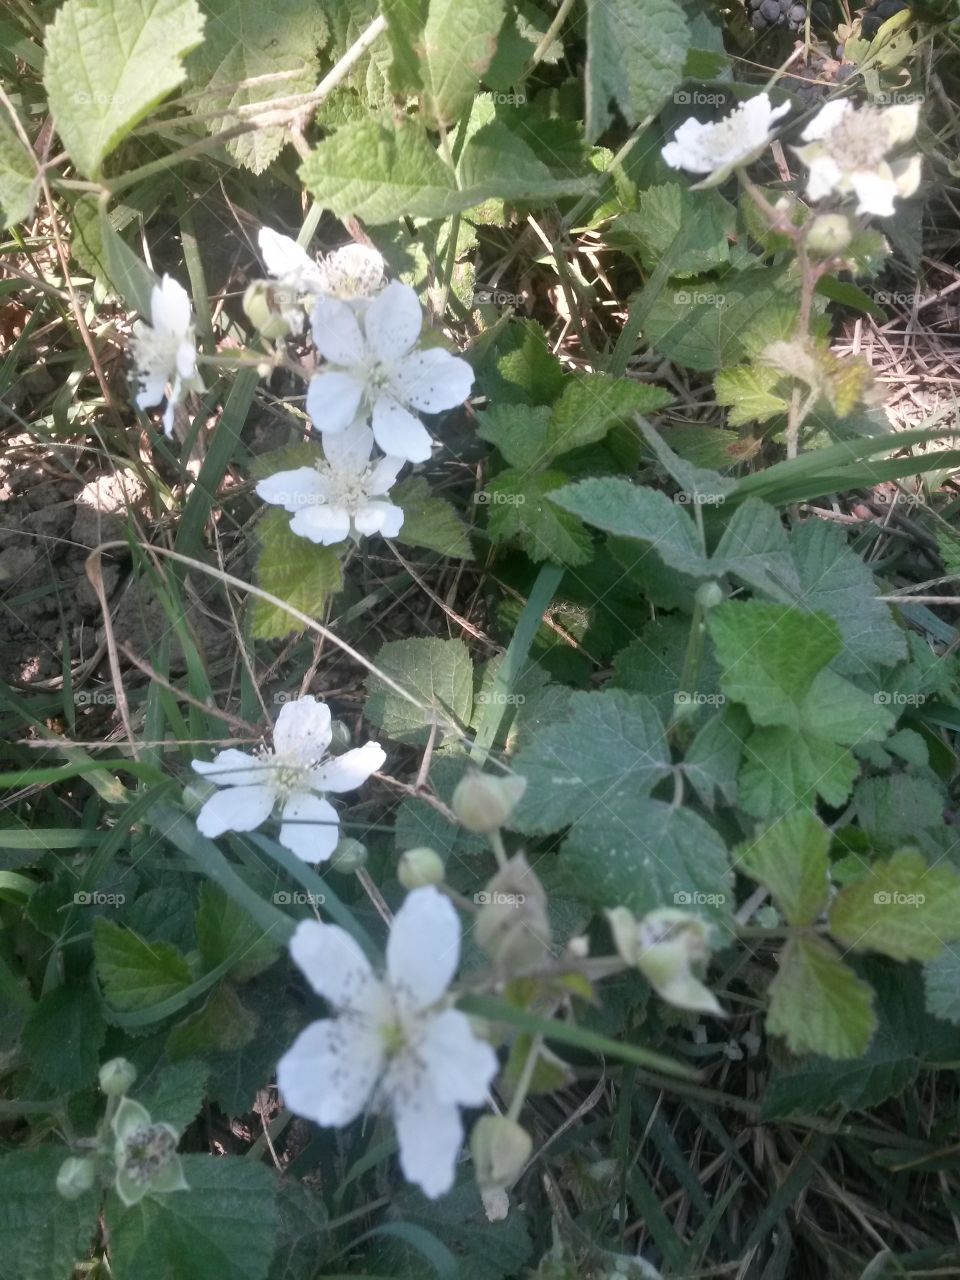 Blackberry flowers